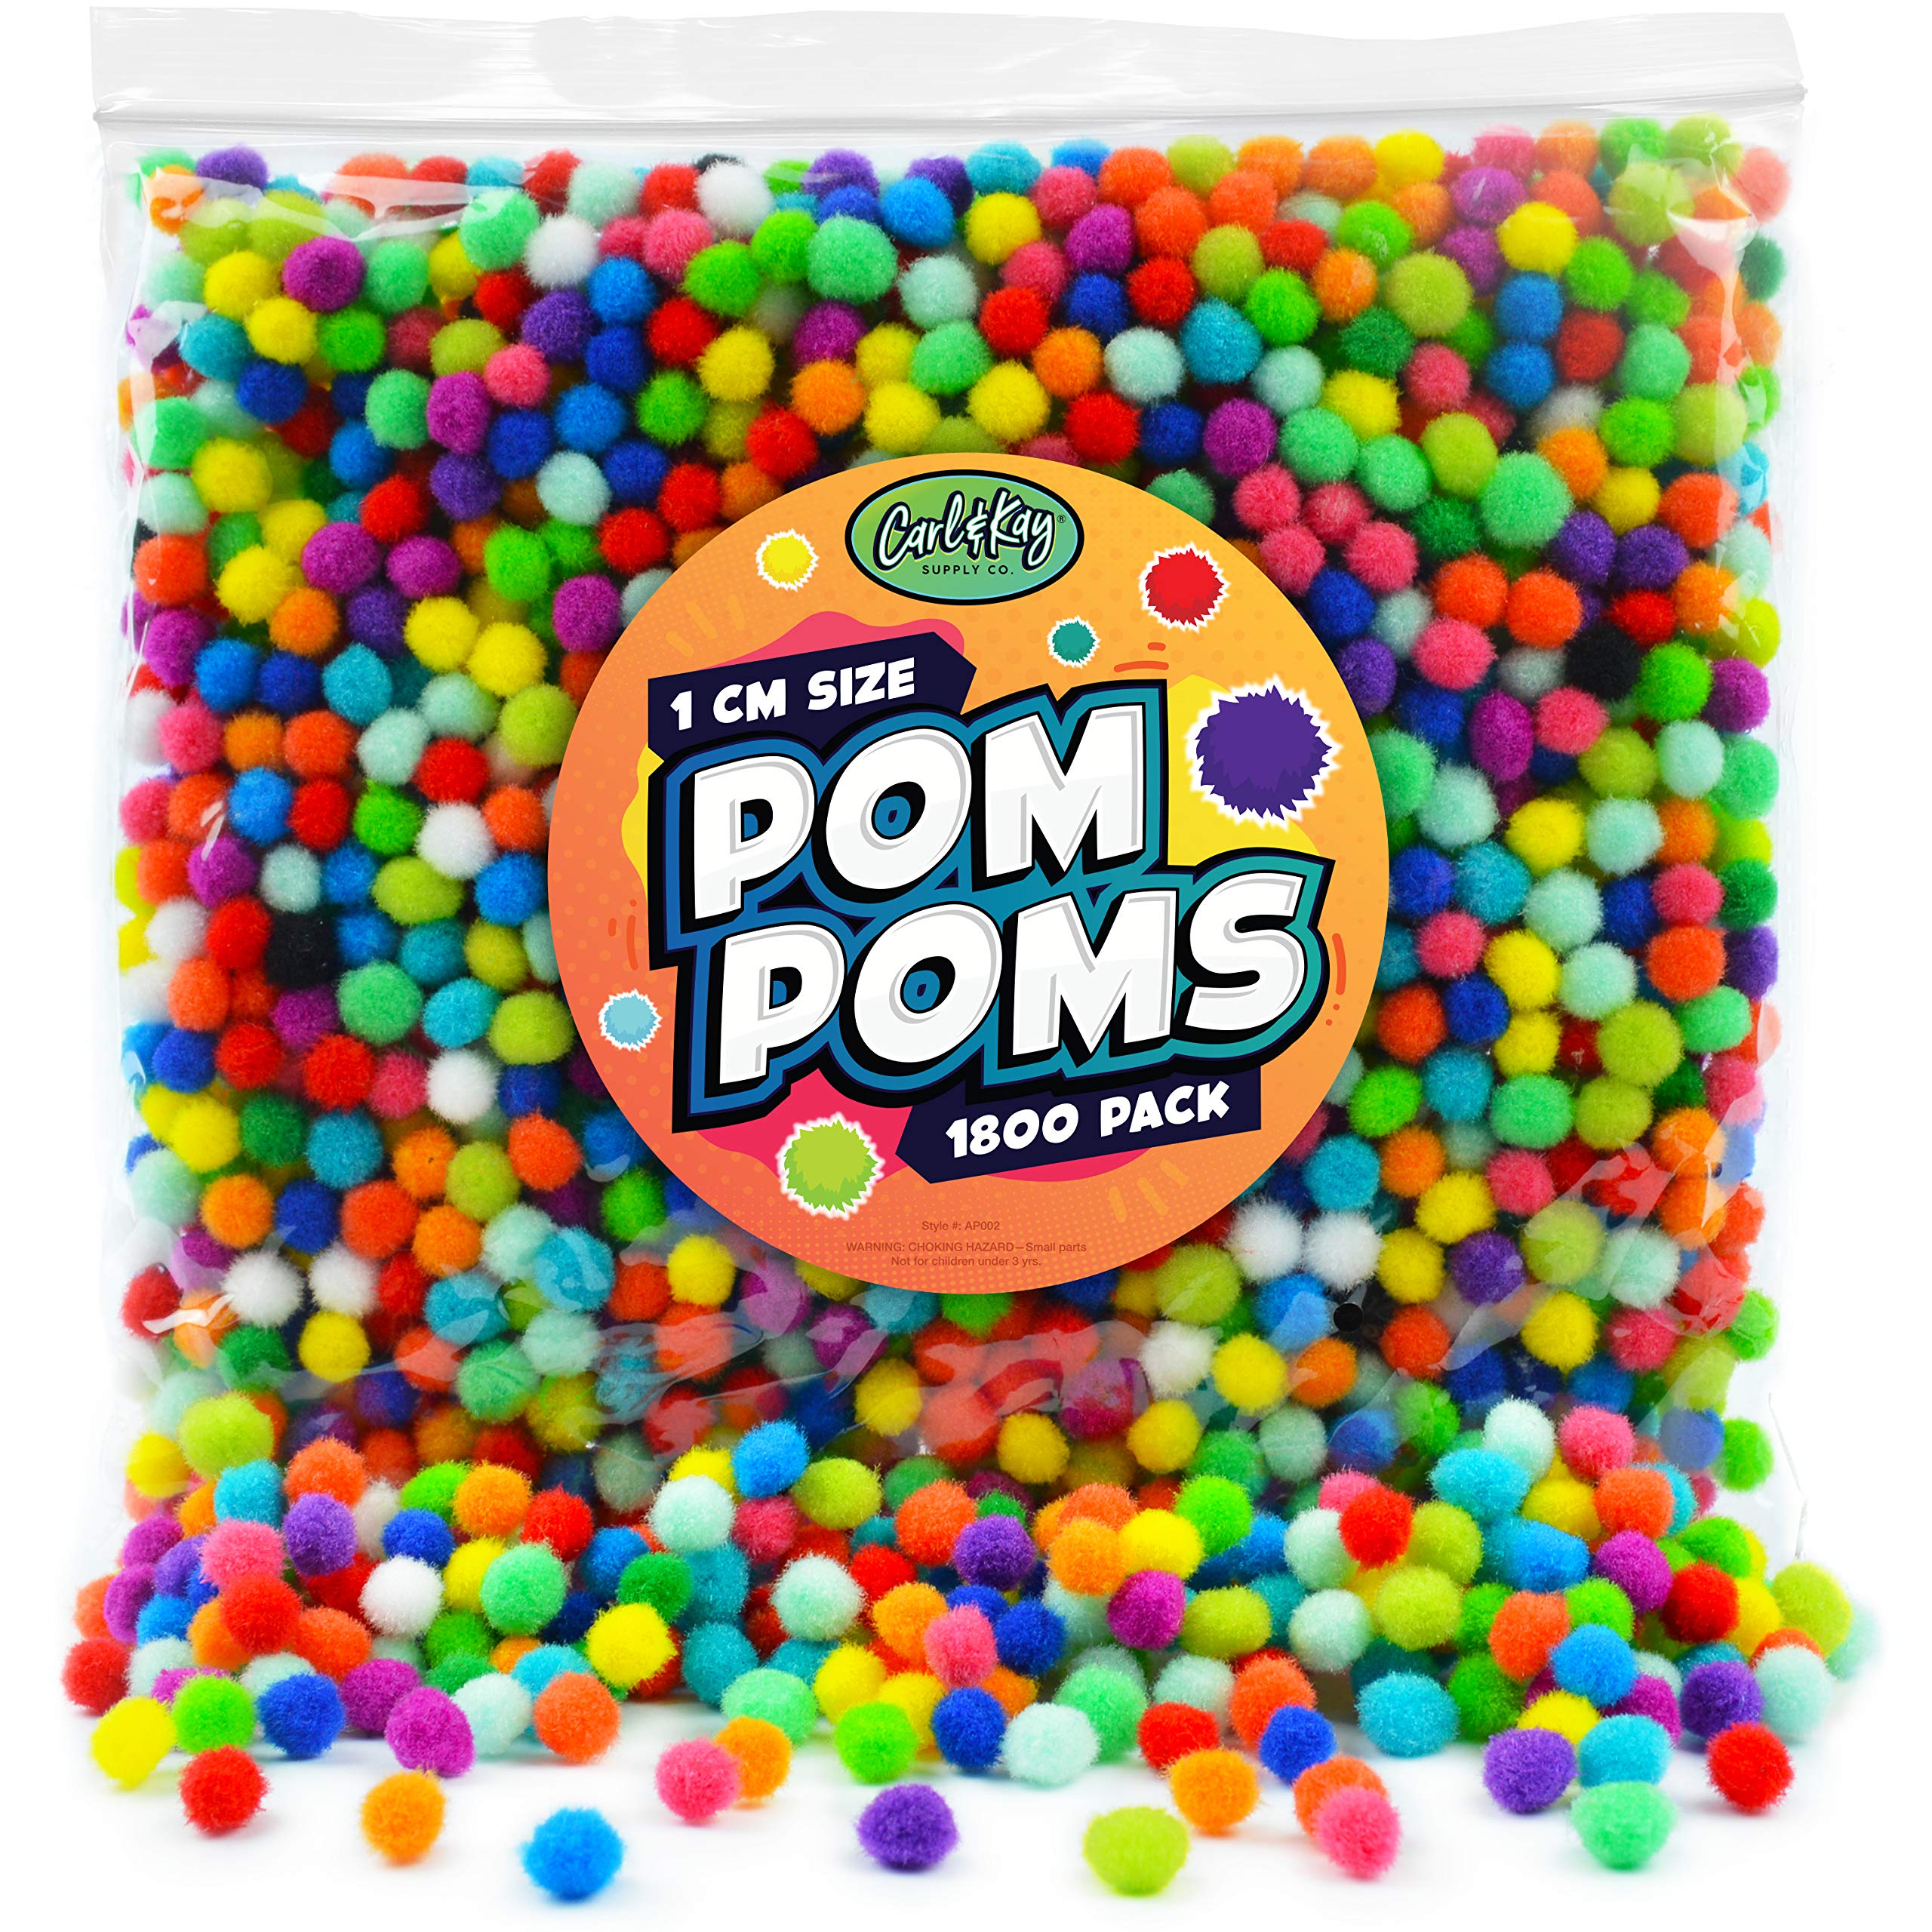 100Pcs Pom poms 15mm Mini Fluffy Soft Pom Poms Pompoms Ball